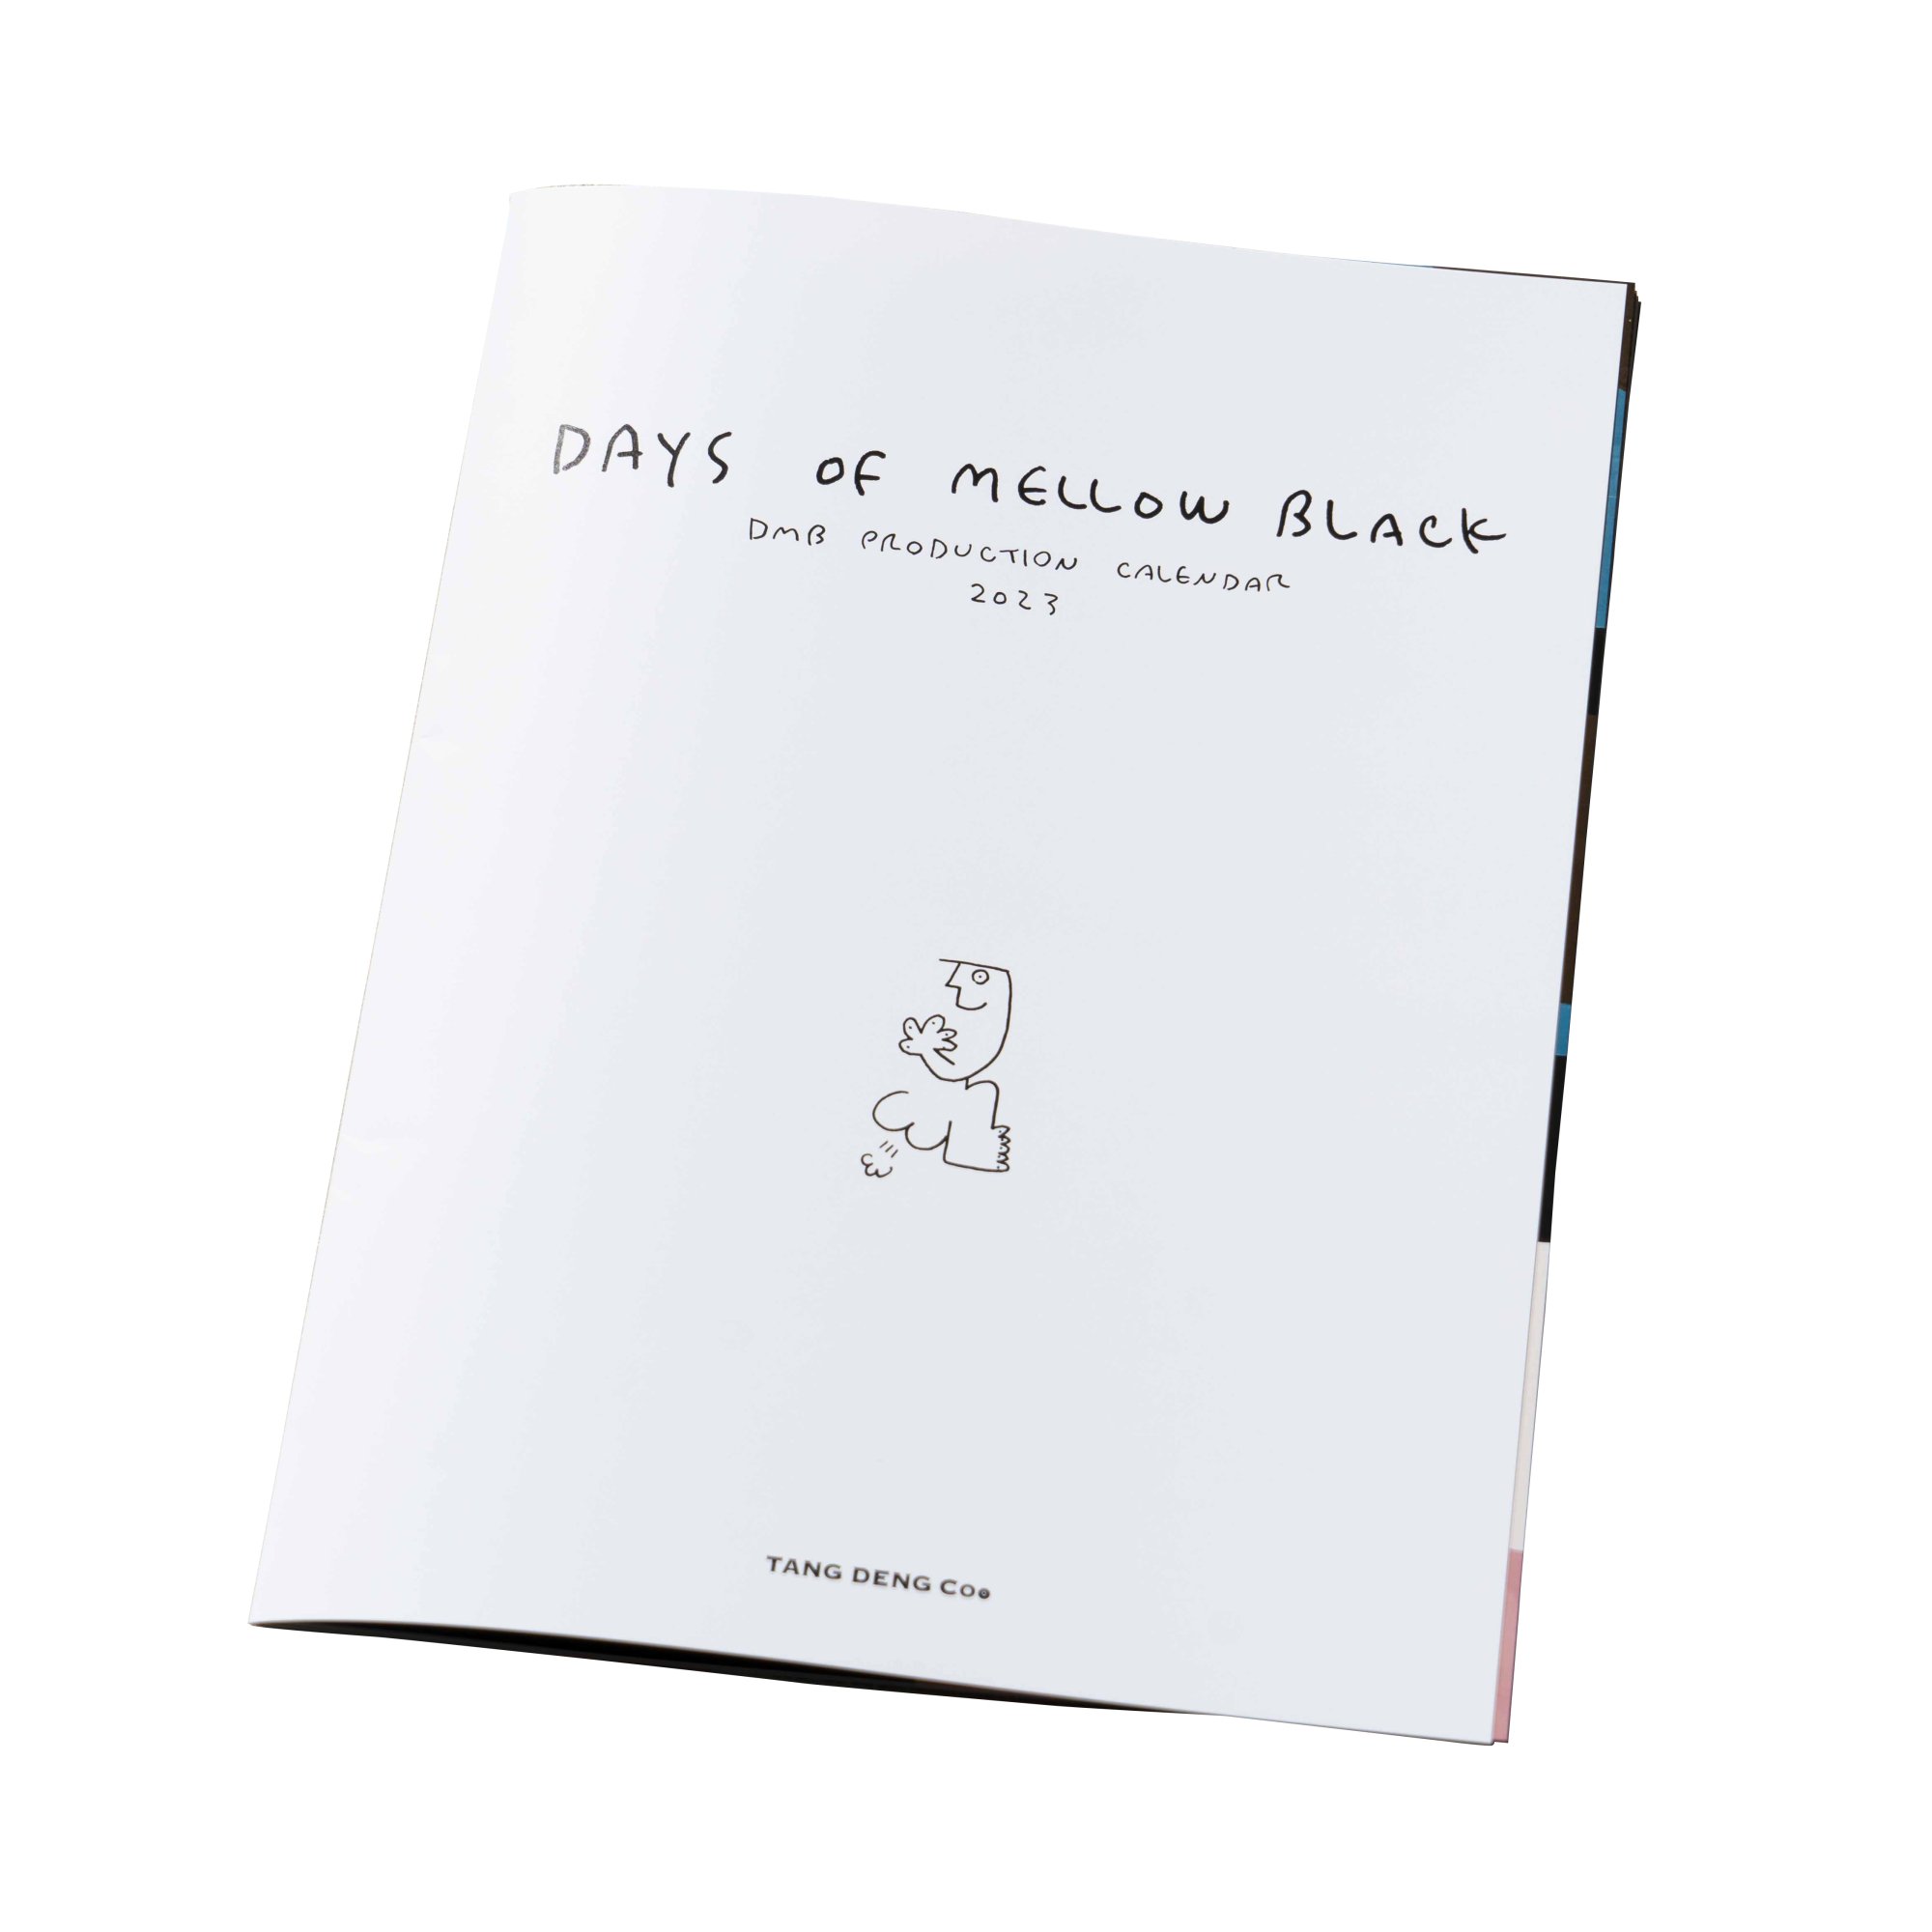 DMB<br>Days of Mellow Black Calendar 2023<br>